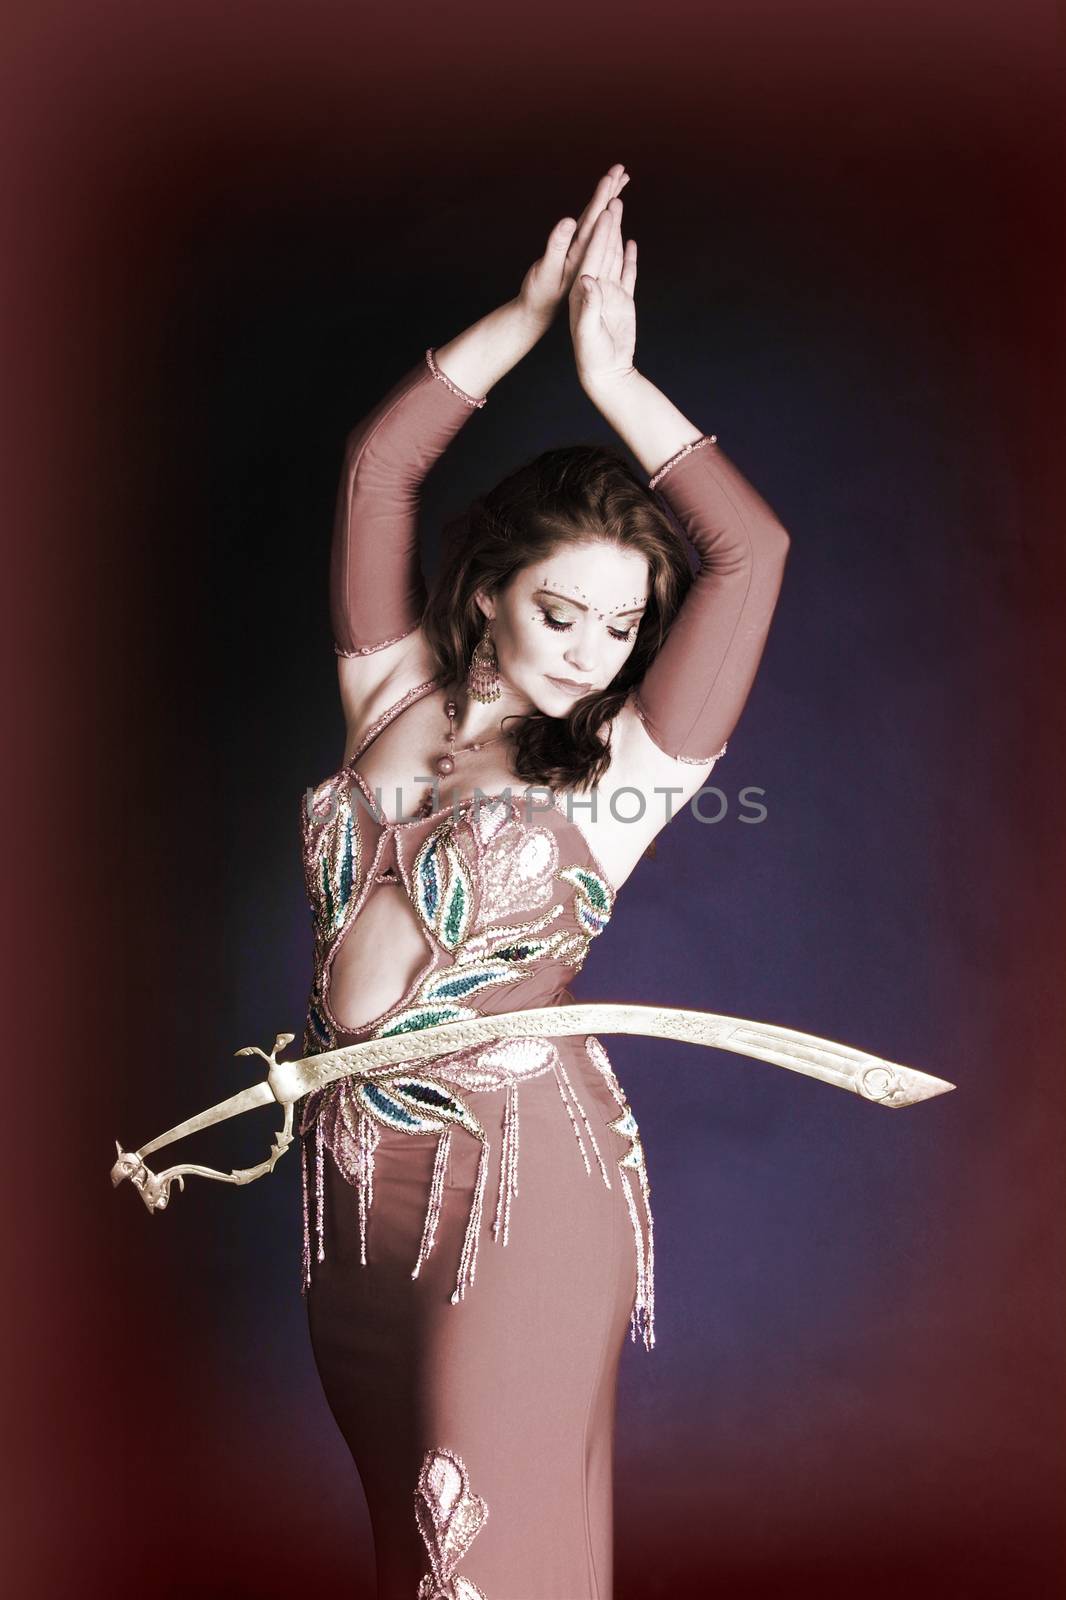 Belly Dancer balancing sword by carlush